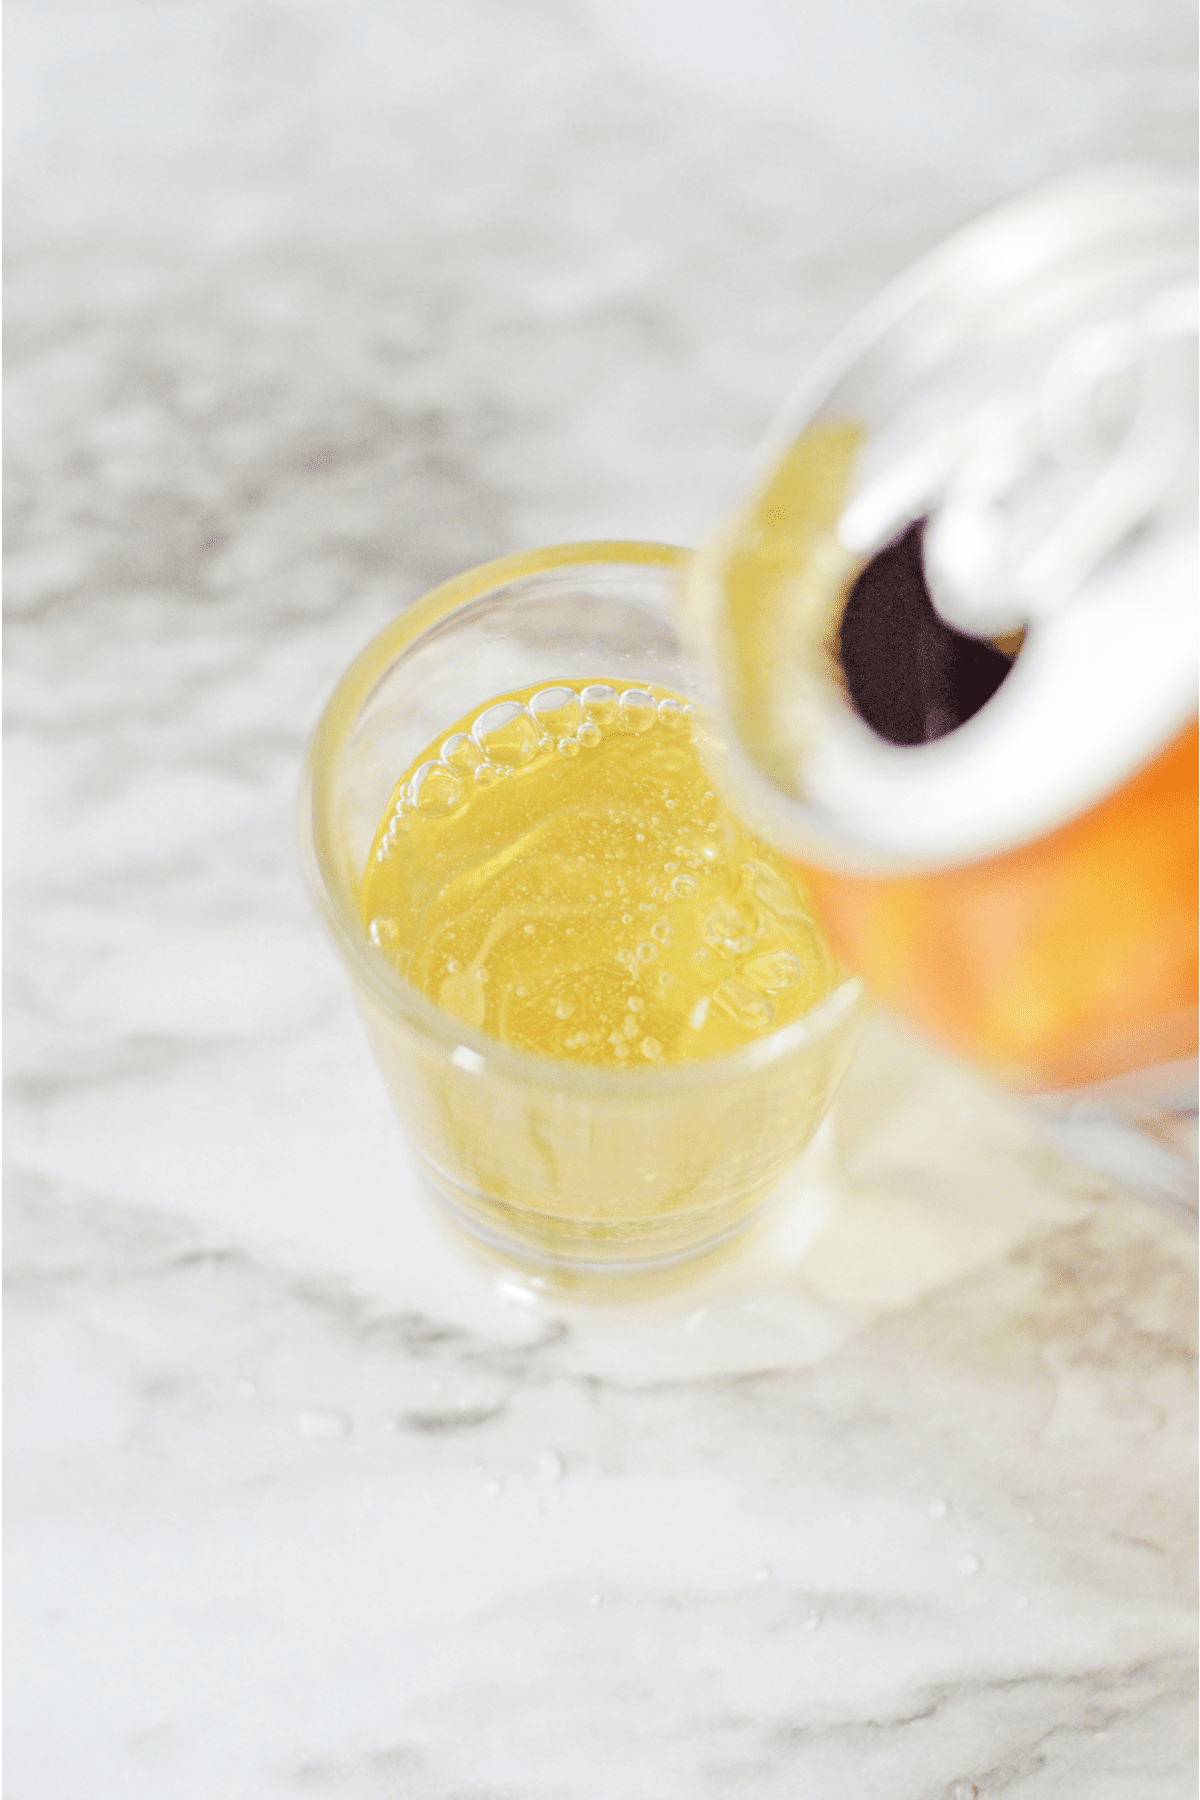 Adding cream soda to shot glass